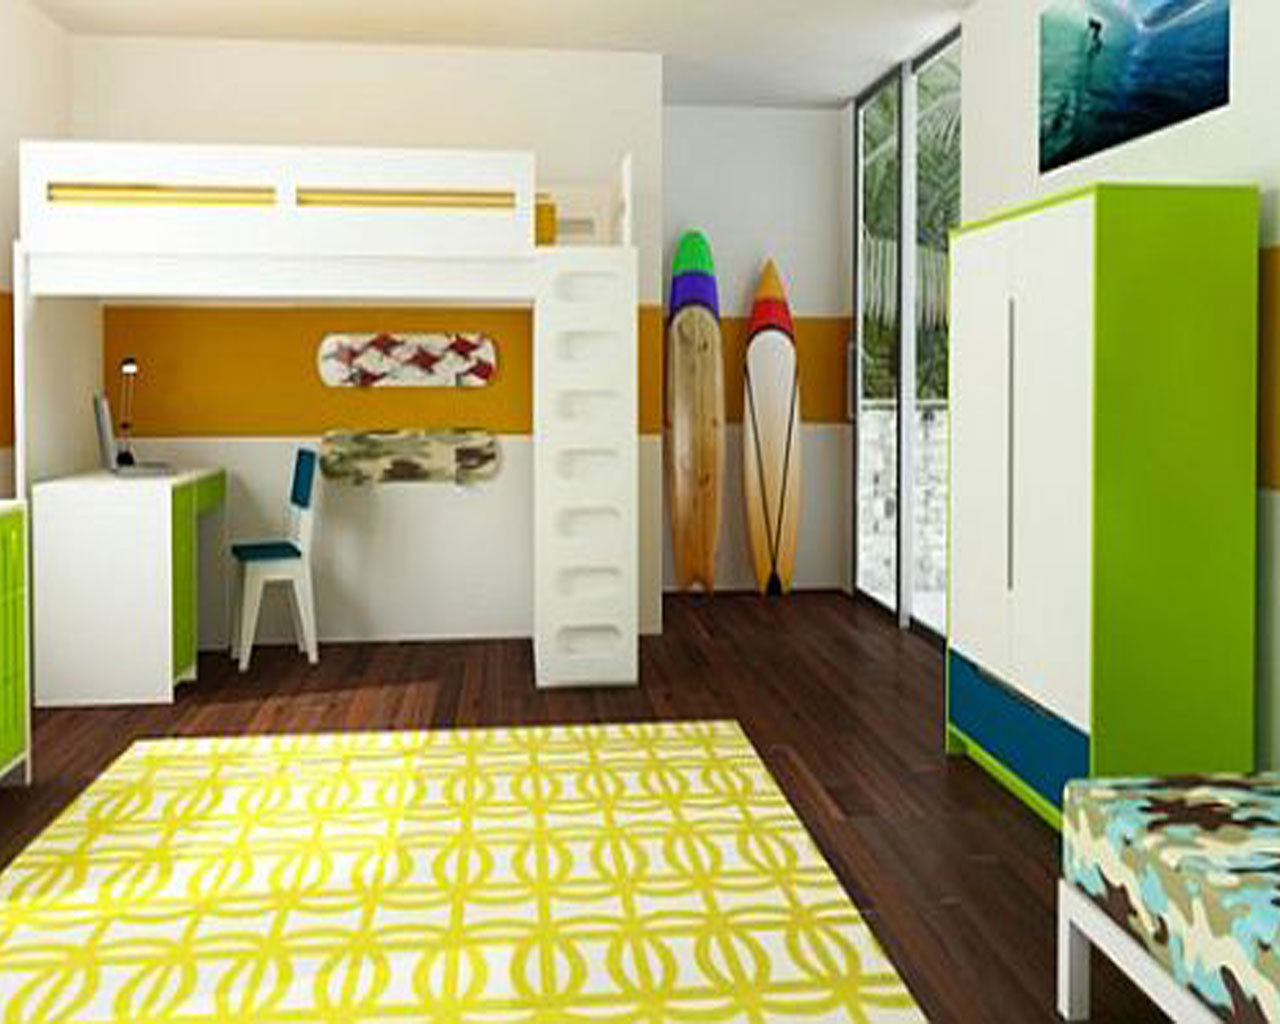 Decor ideas for kids rooms wallpaper modern decor ideas for kids rooms